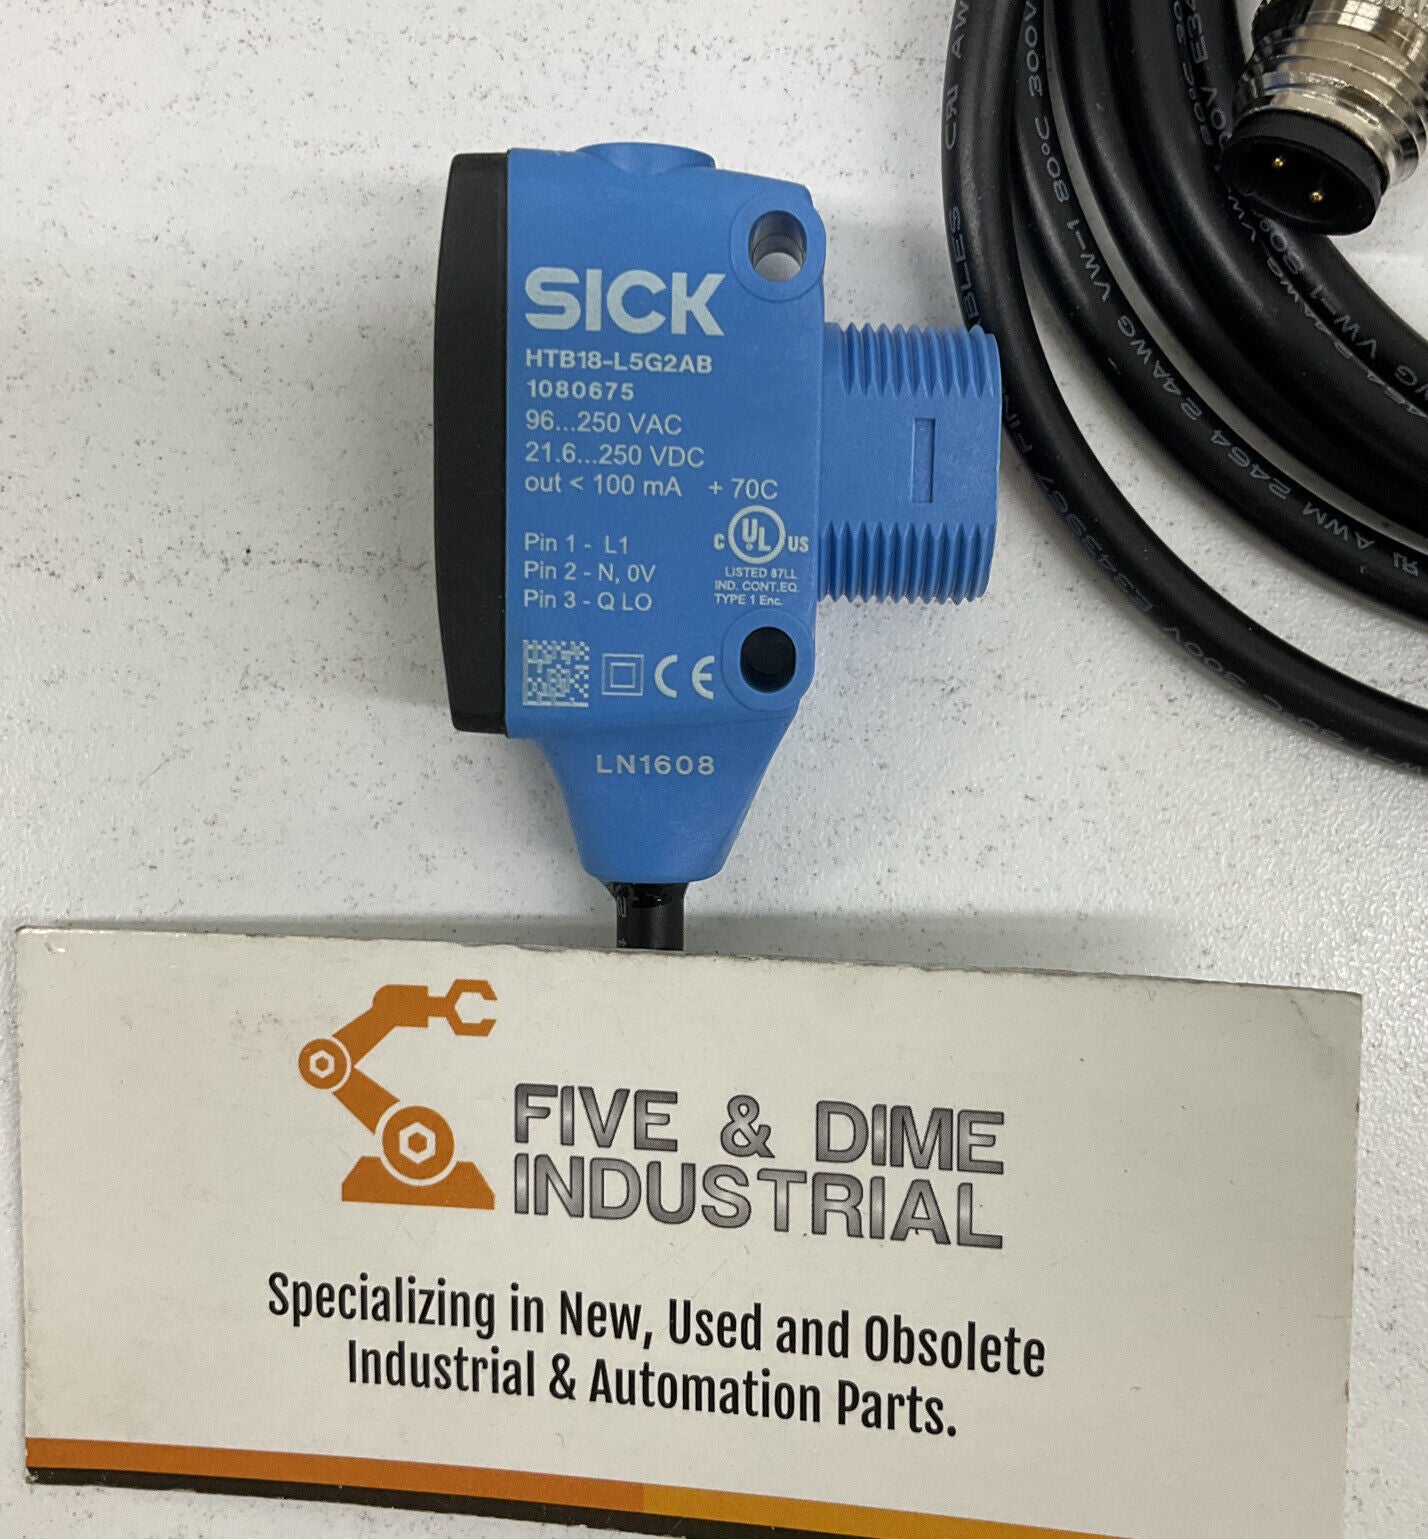 Sick HTB18-L5G2AB 1080675 Photoelectric Sensor Switch (BL161)